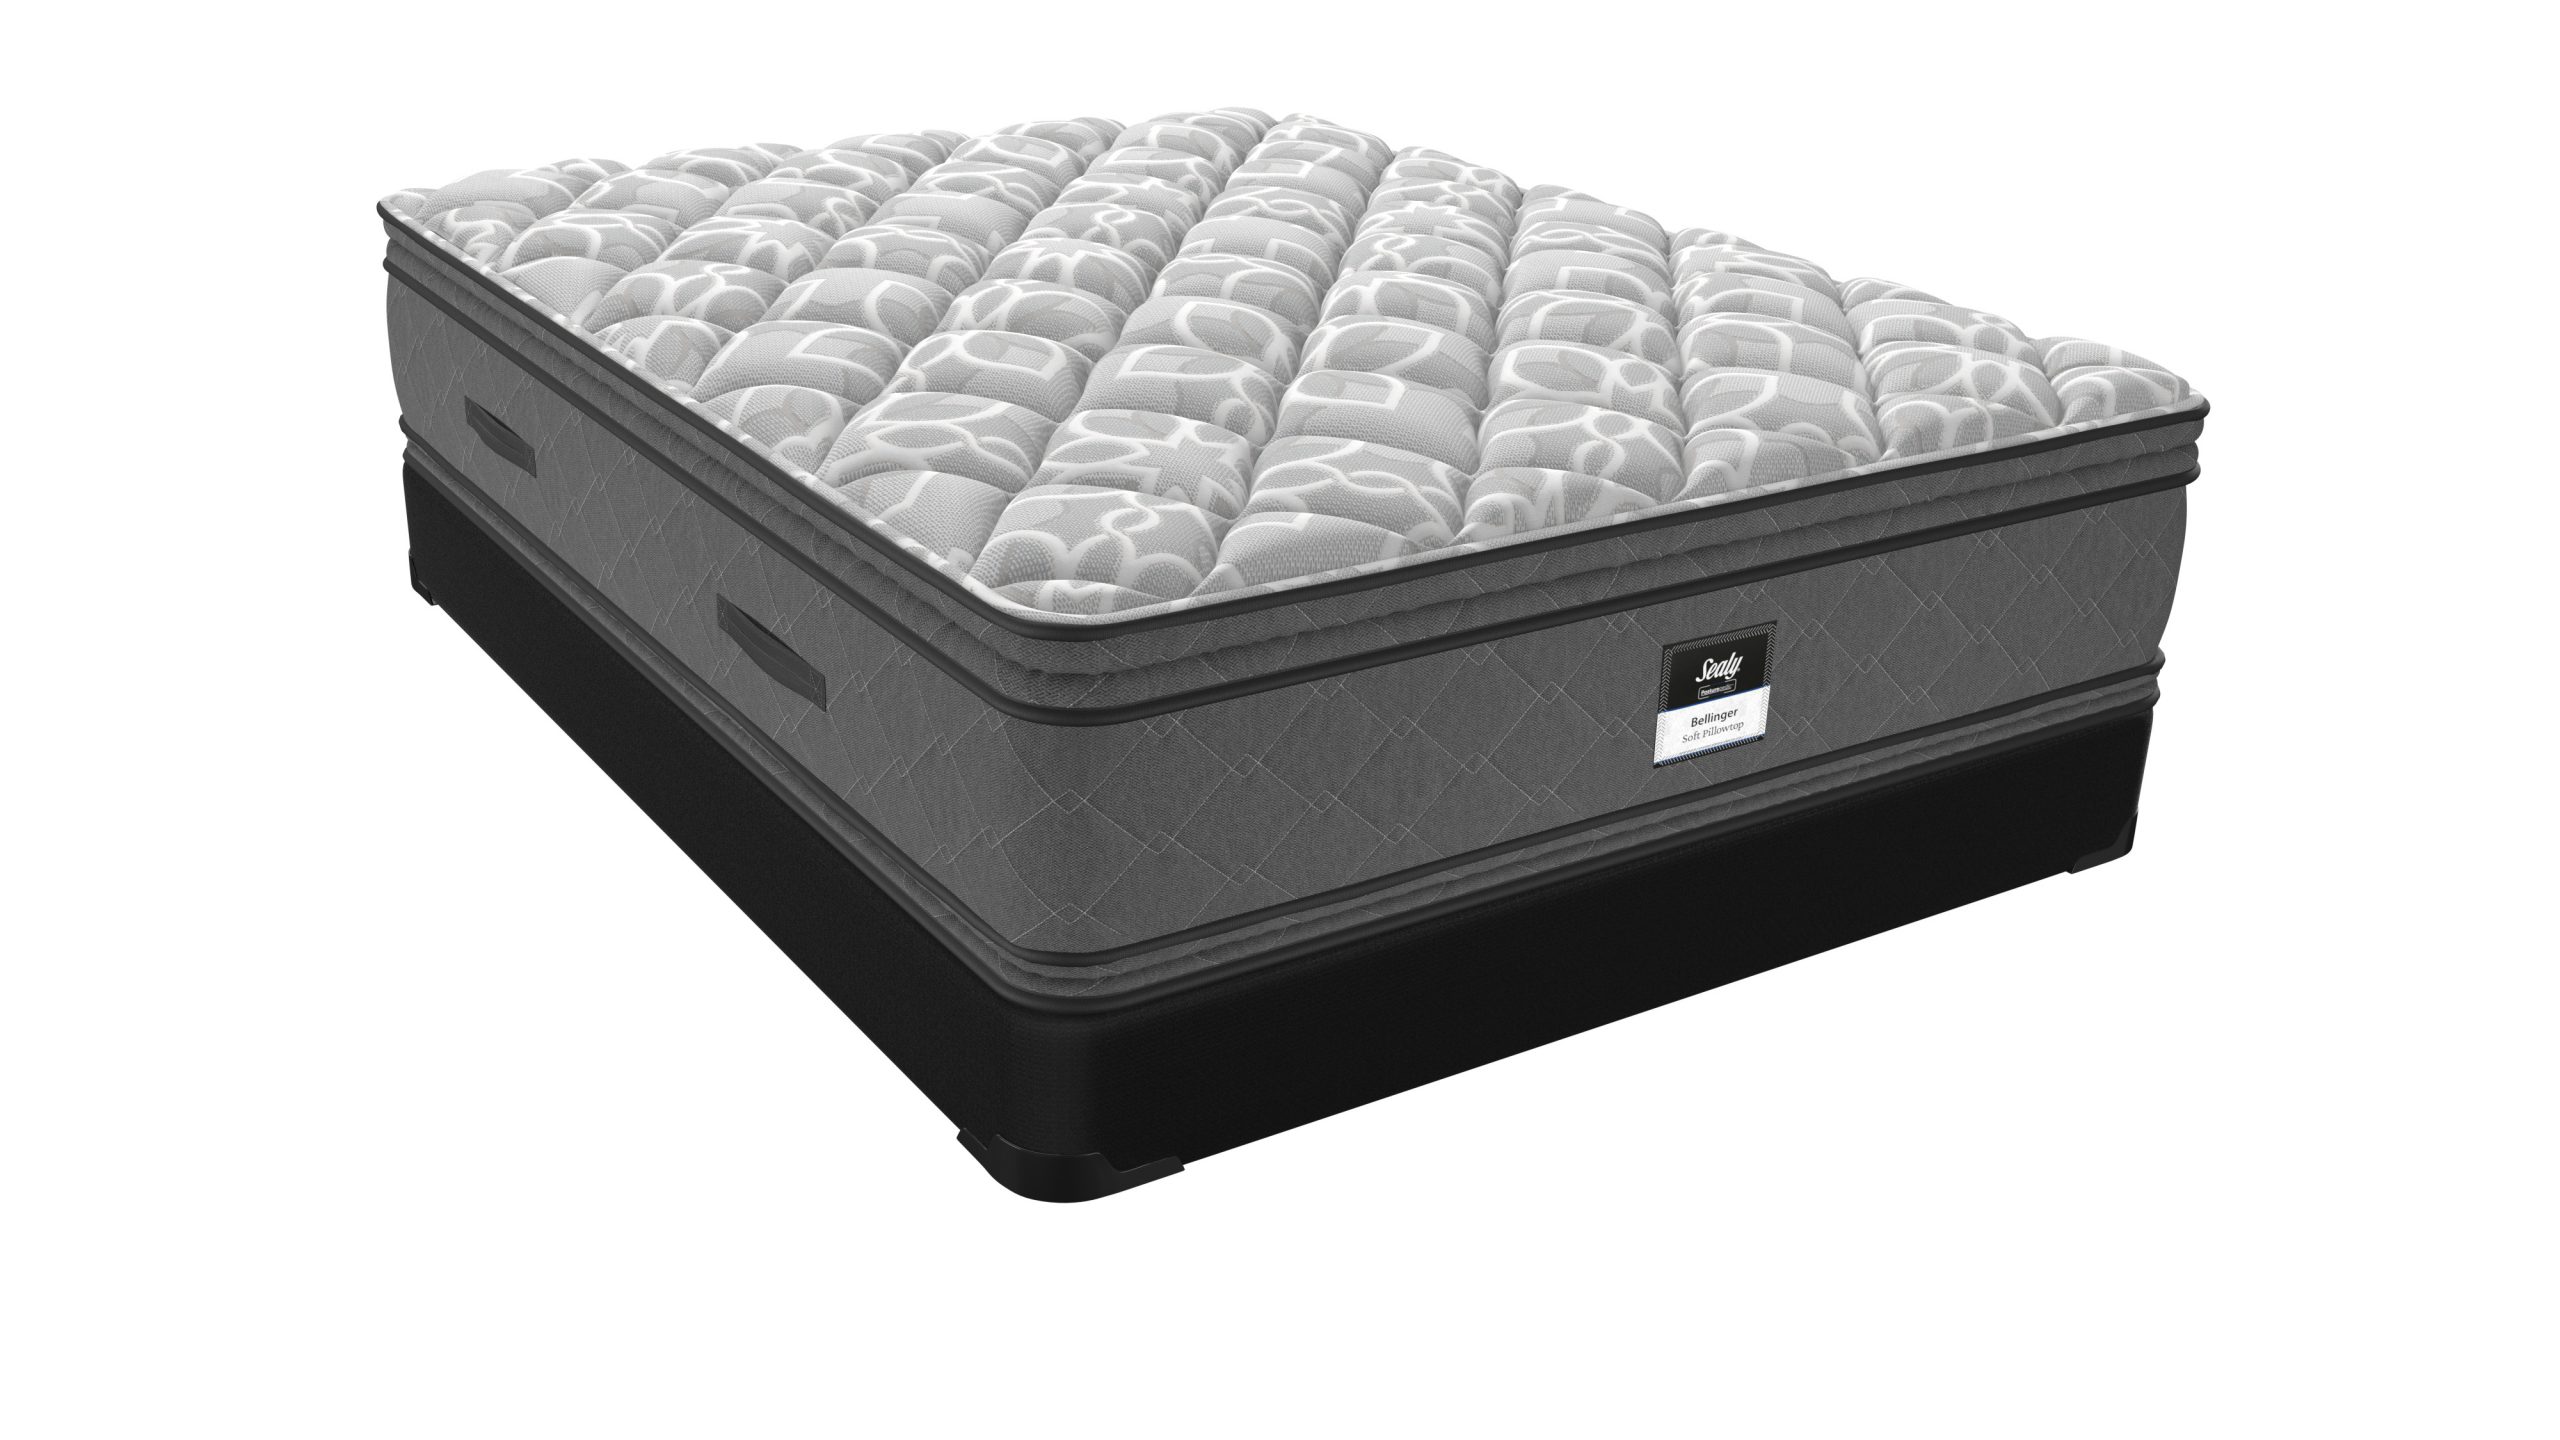 2 sided sealy sleep soundly plush mattress